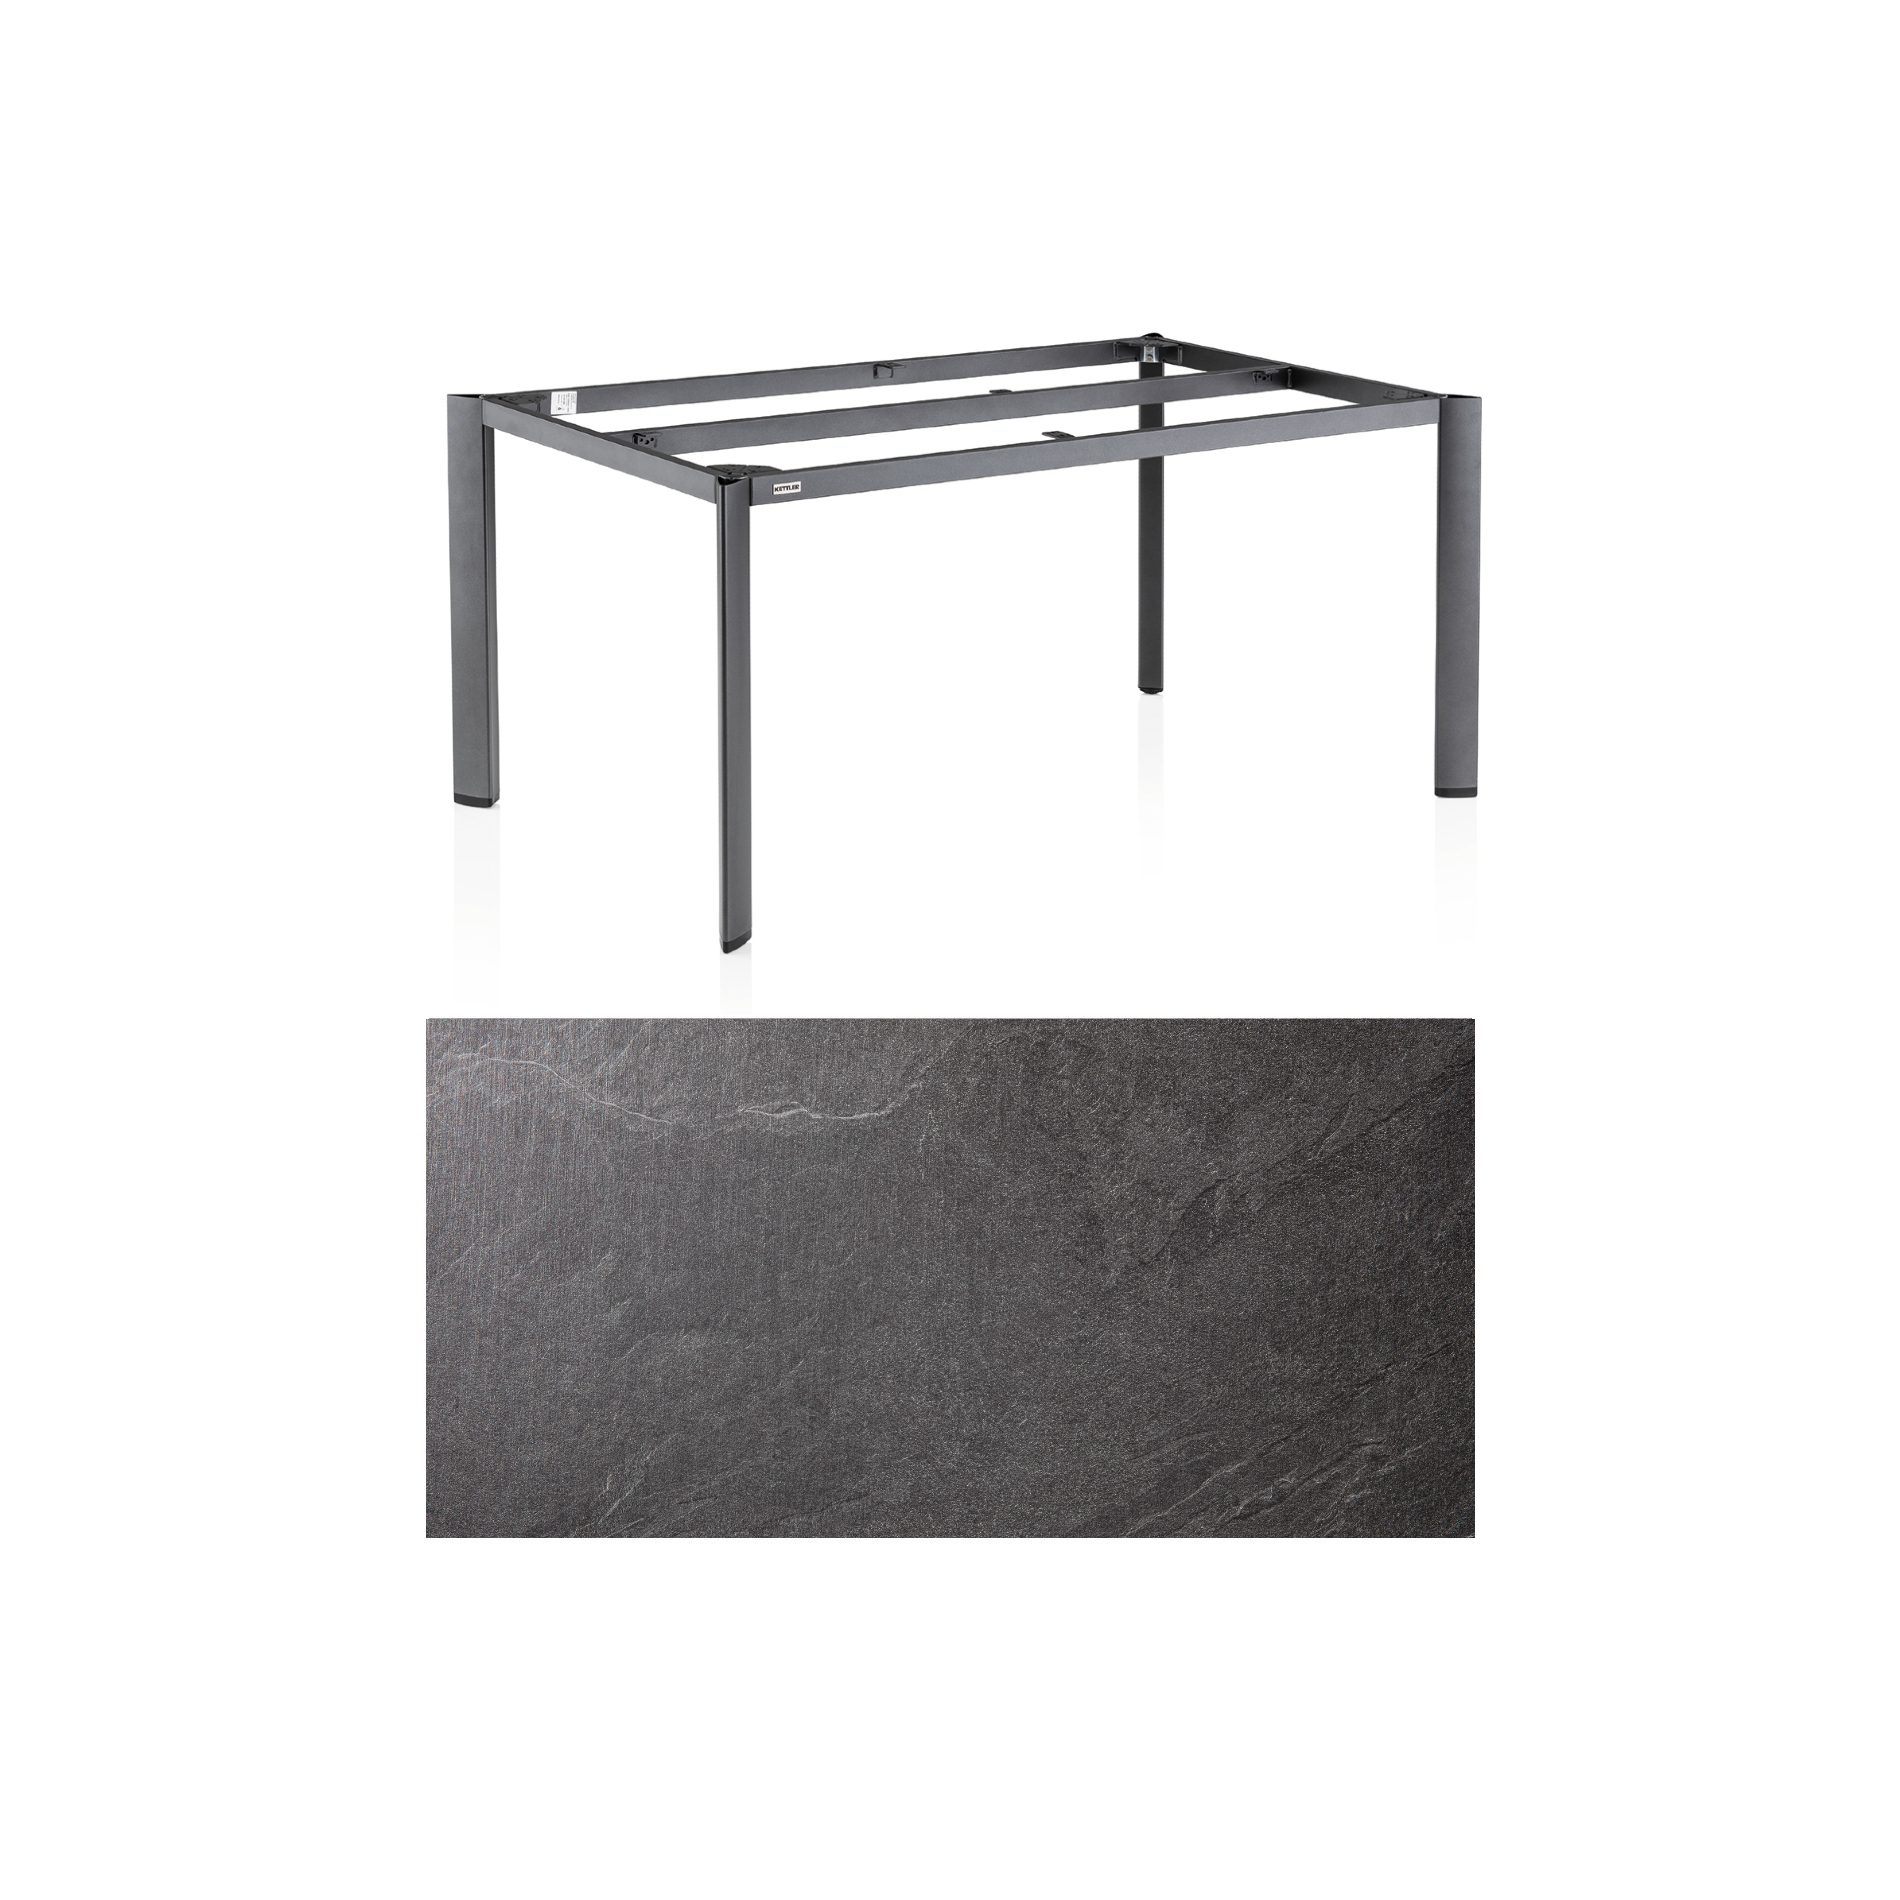 Kettler "Edge" Gartentisch, Gestell Aluminium anthrazit, Tischplatte HPL Jura anthrazit, 160x95 cm